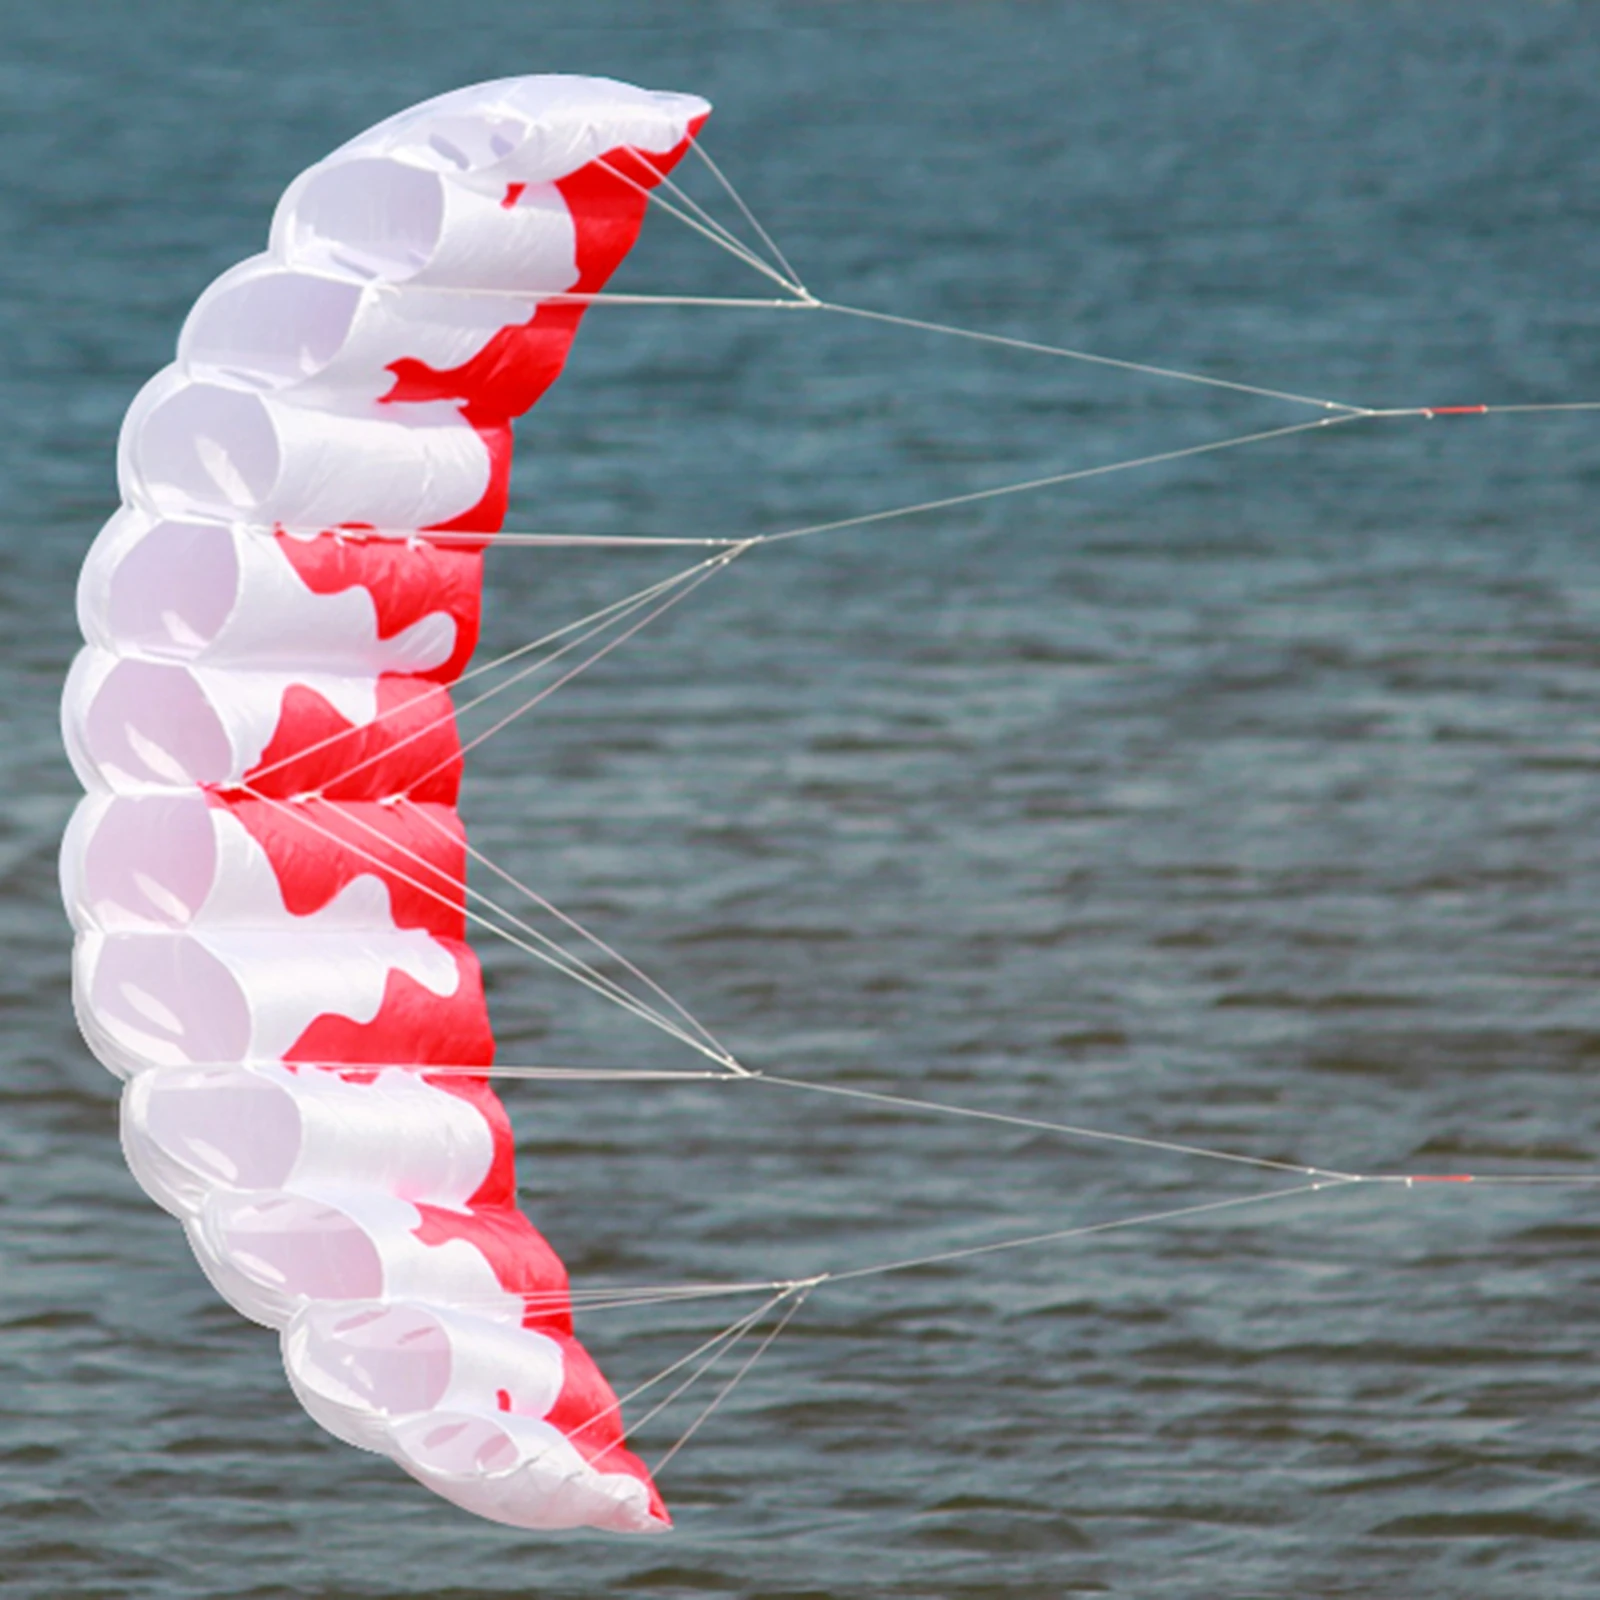 Portable Kitesurfing Trainer Kite, Adults Beach Summer Stunt Power Kites Flying Wing Outside Toys Sport Games